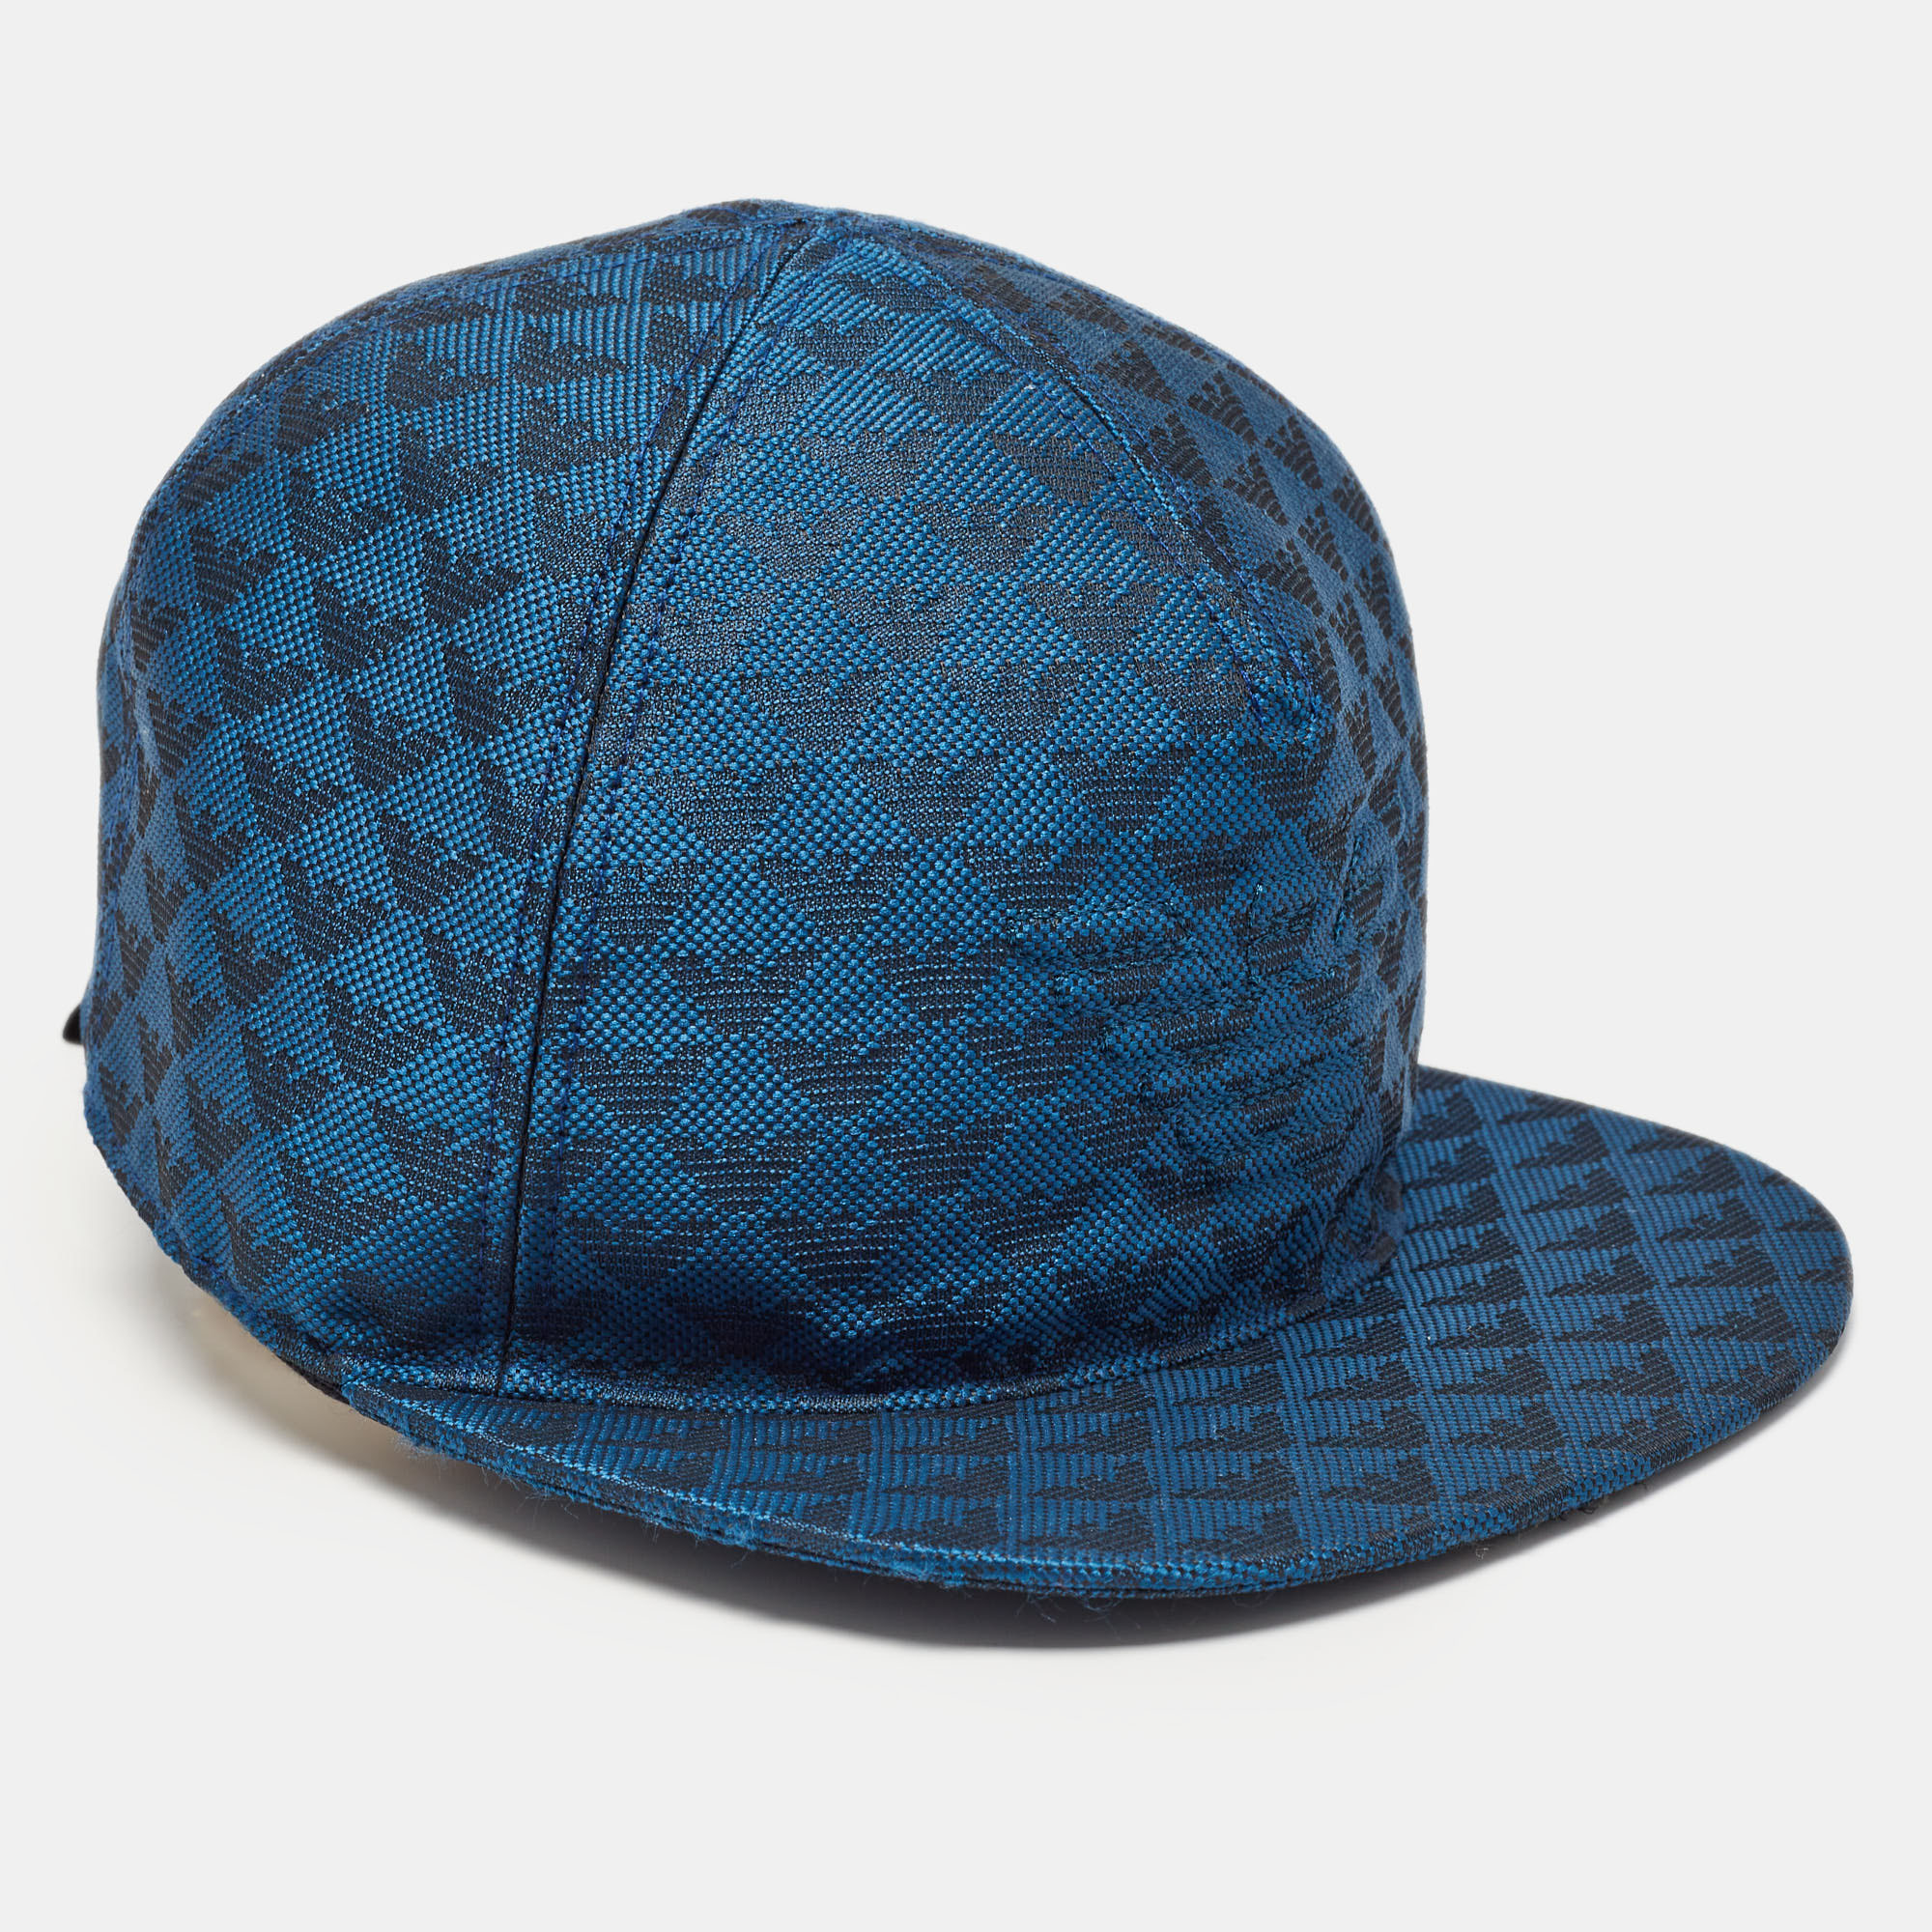 Emporio armani blue jacquard aquila baseball hat s